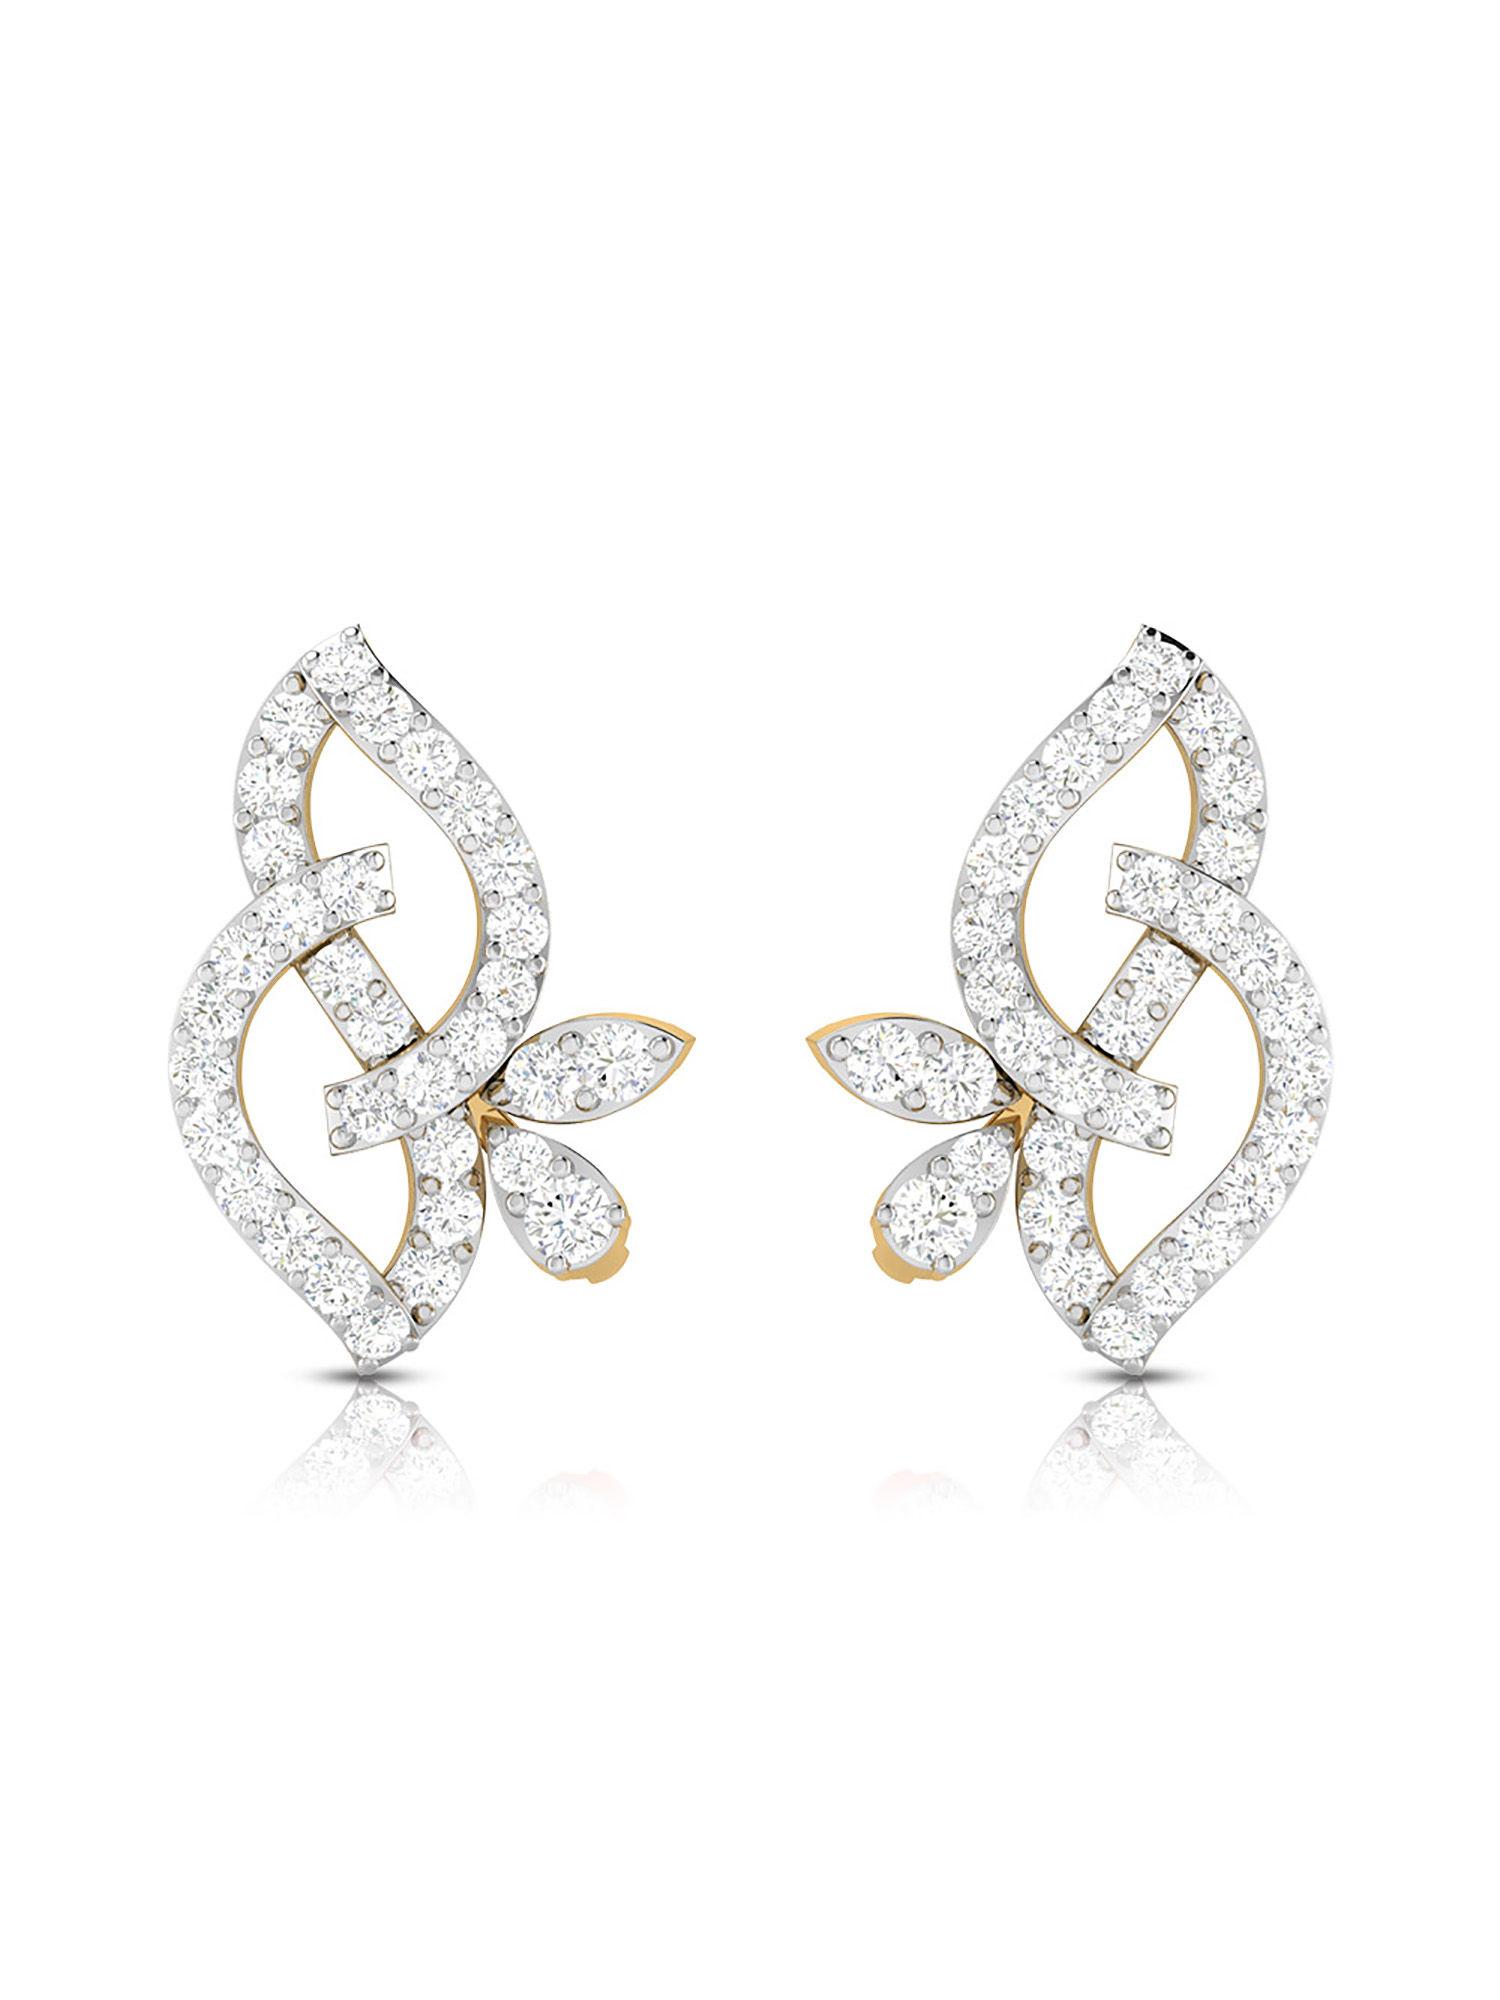 intwisted lab grown diamond earrings